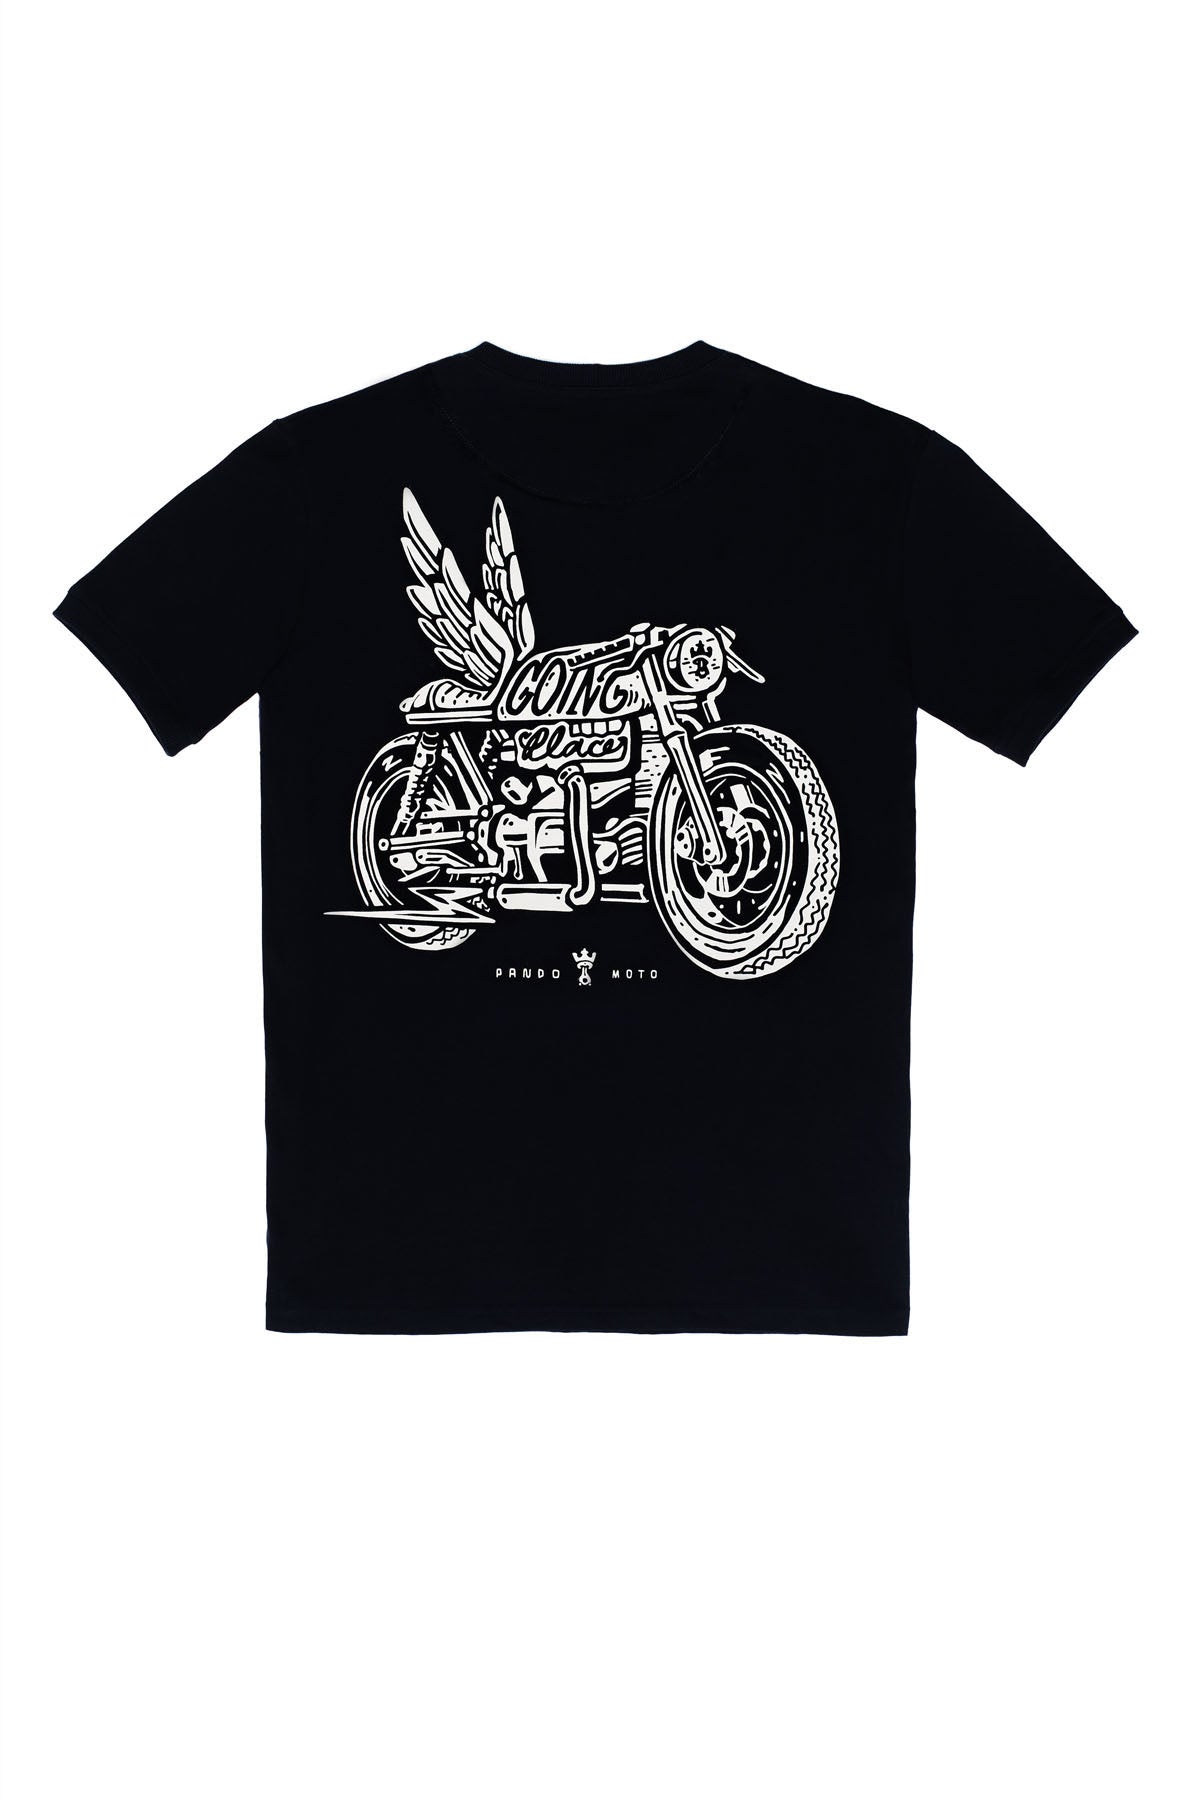 Pando Moto MIKE MOTO WING 1 T-Shirt